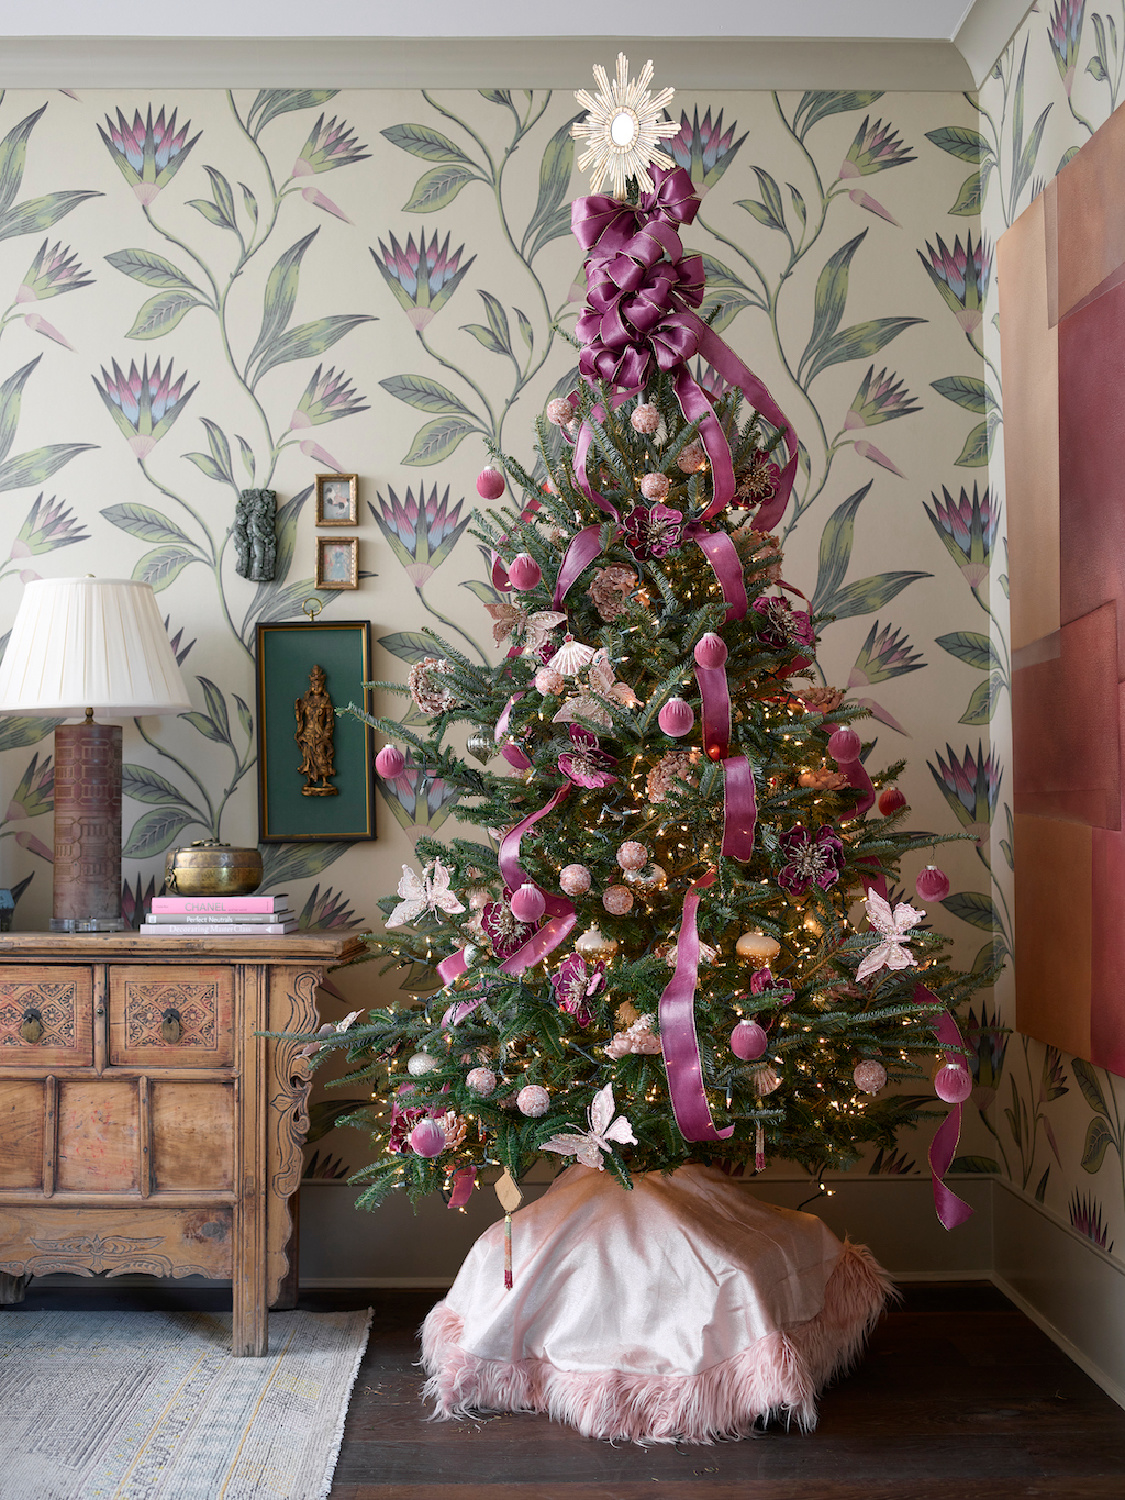 Atlanta Home for the Holidays Designer Showhouse bedroom by Kristin Kong with Christmas tree. #christmasdecorating #pinkchristmas